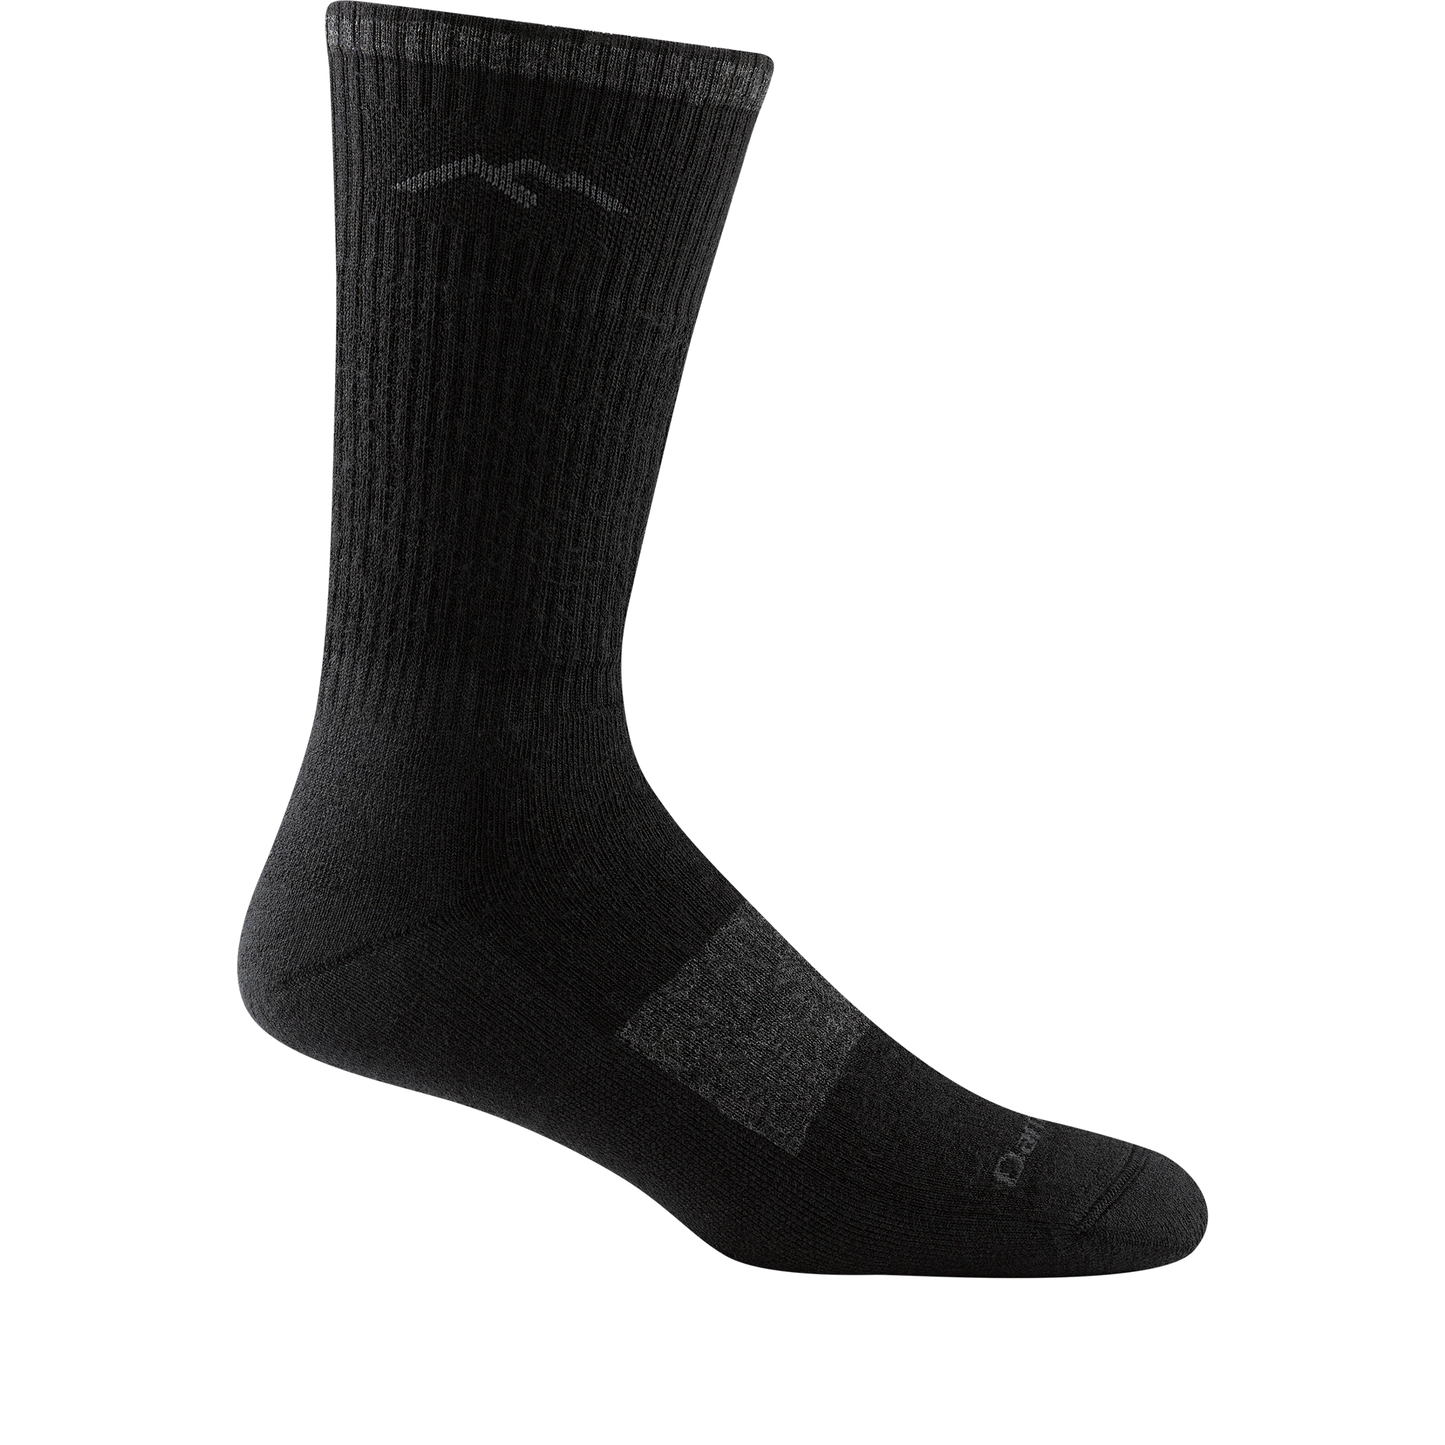 Darn Tough Men's Hiker Boot Full Cushion Midweight Hiking Sock - Onyx